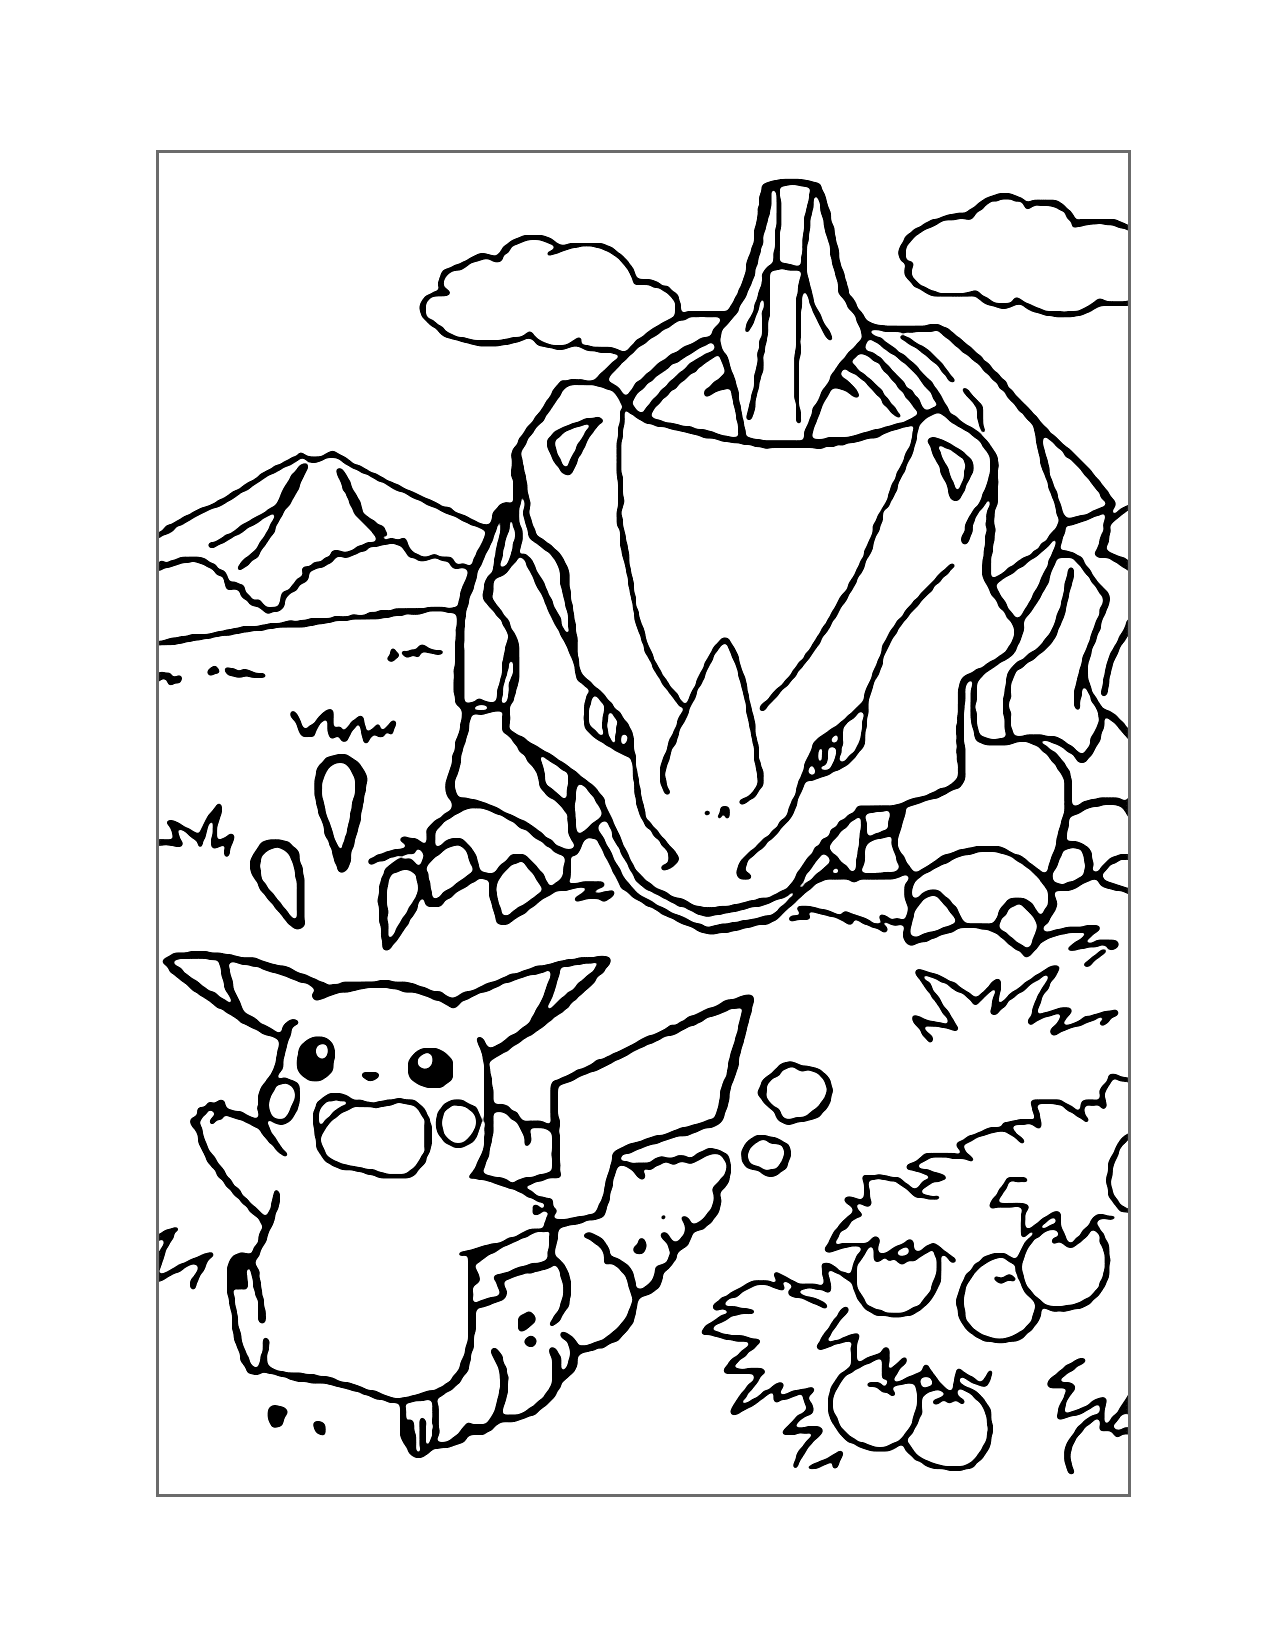 Pikachu Meets Rhyhorn Coloring Page